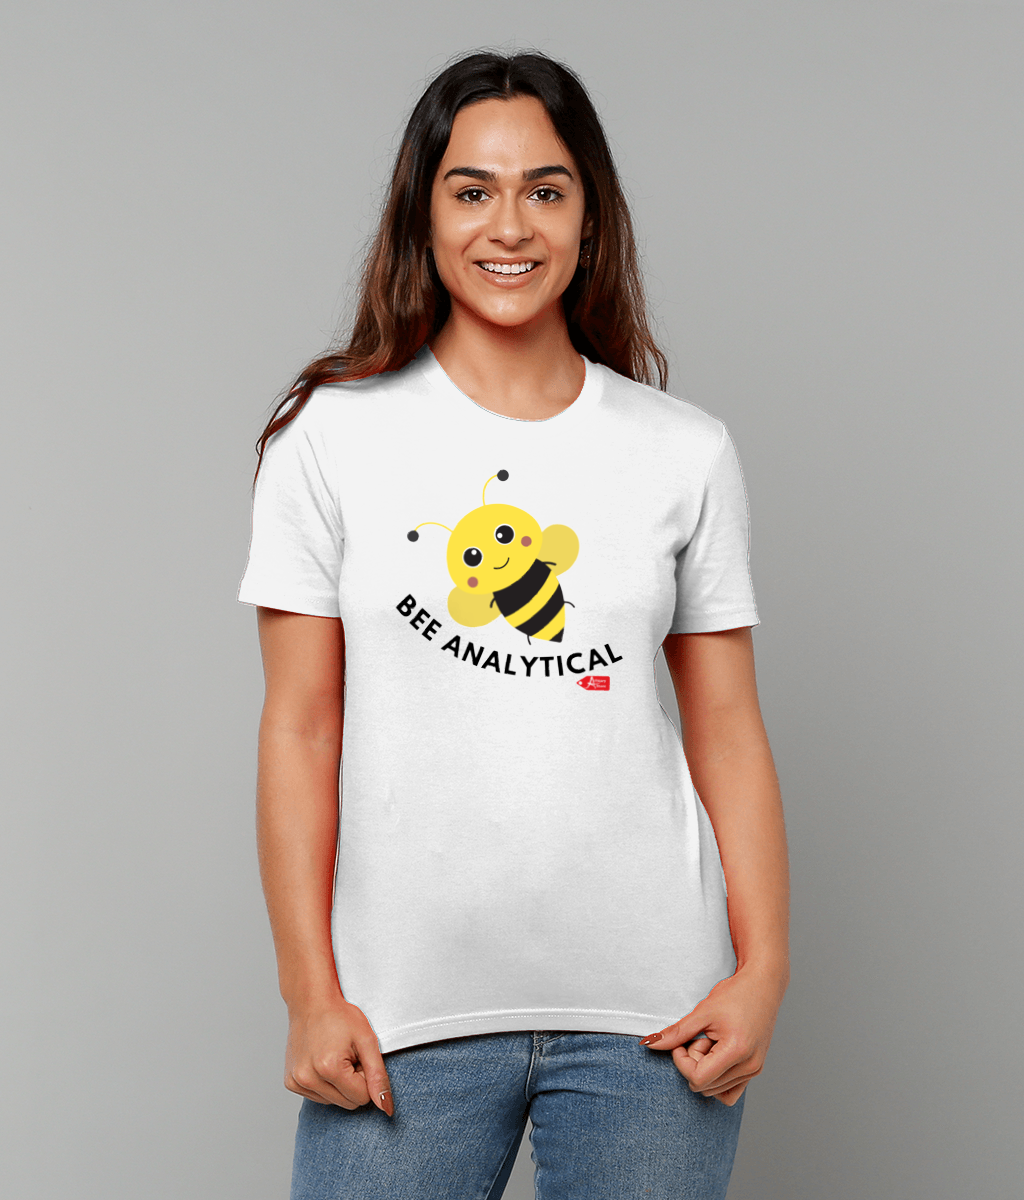 Bee Analytical T-shirt